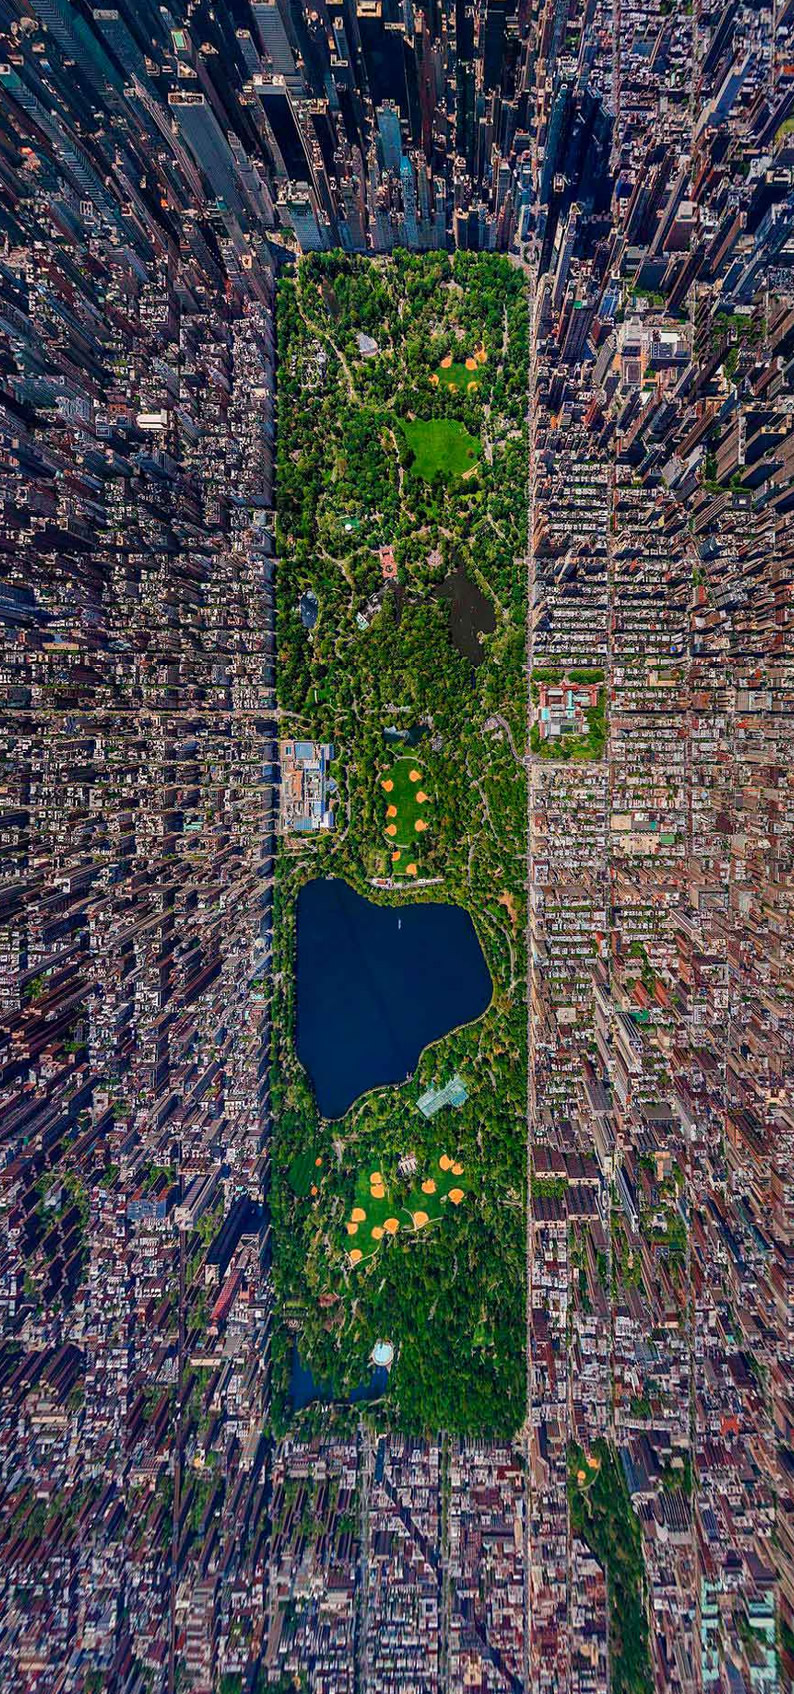 Central Park, New York City2